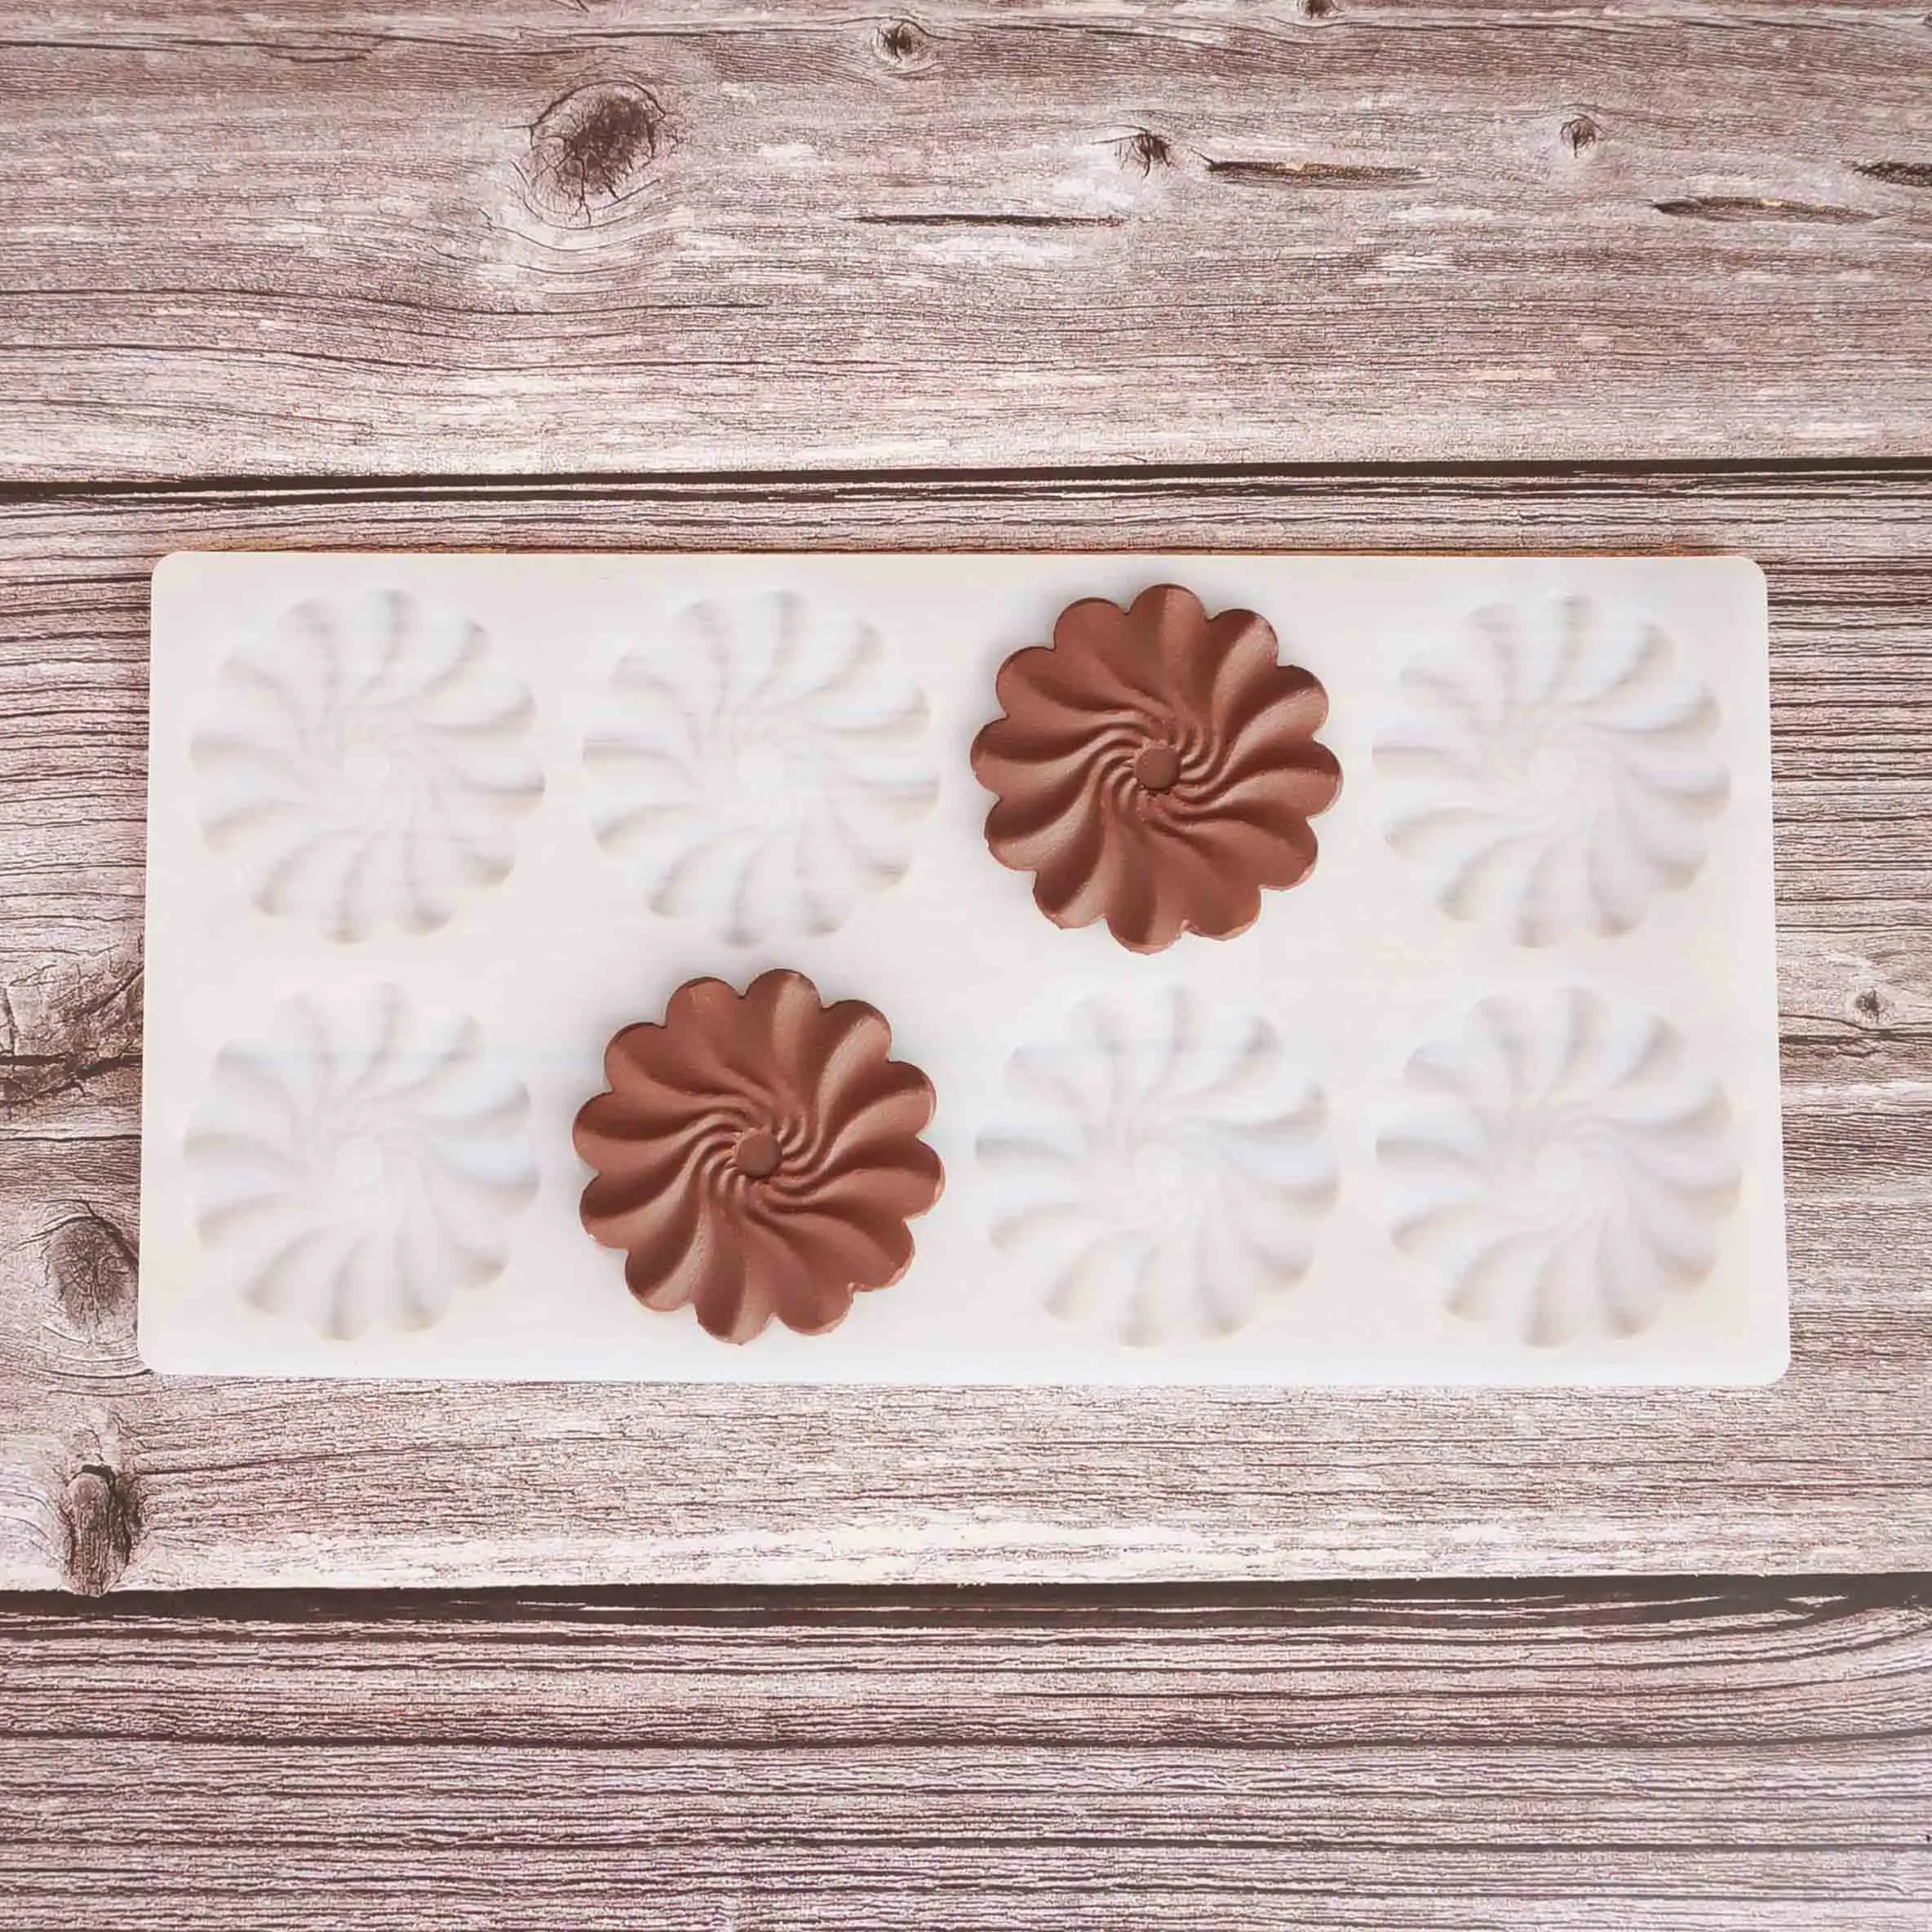 Ruffled Flower Shape Chocolate Stencil Cake Decorating Silicone Mold Transfer Sheet Baking Stencil Chablon